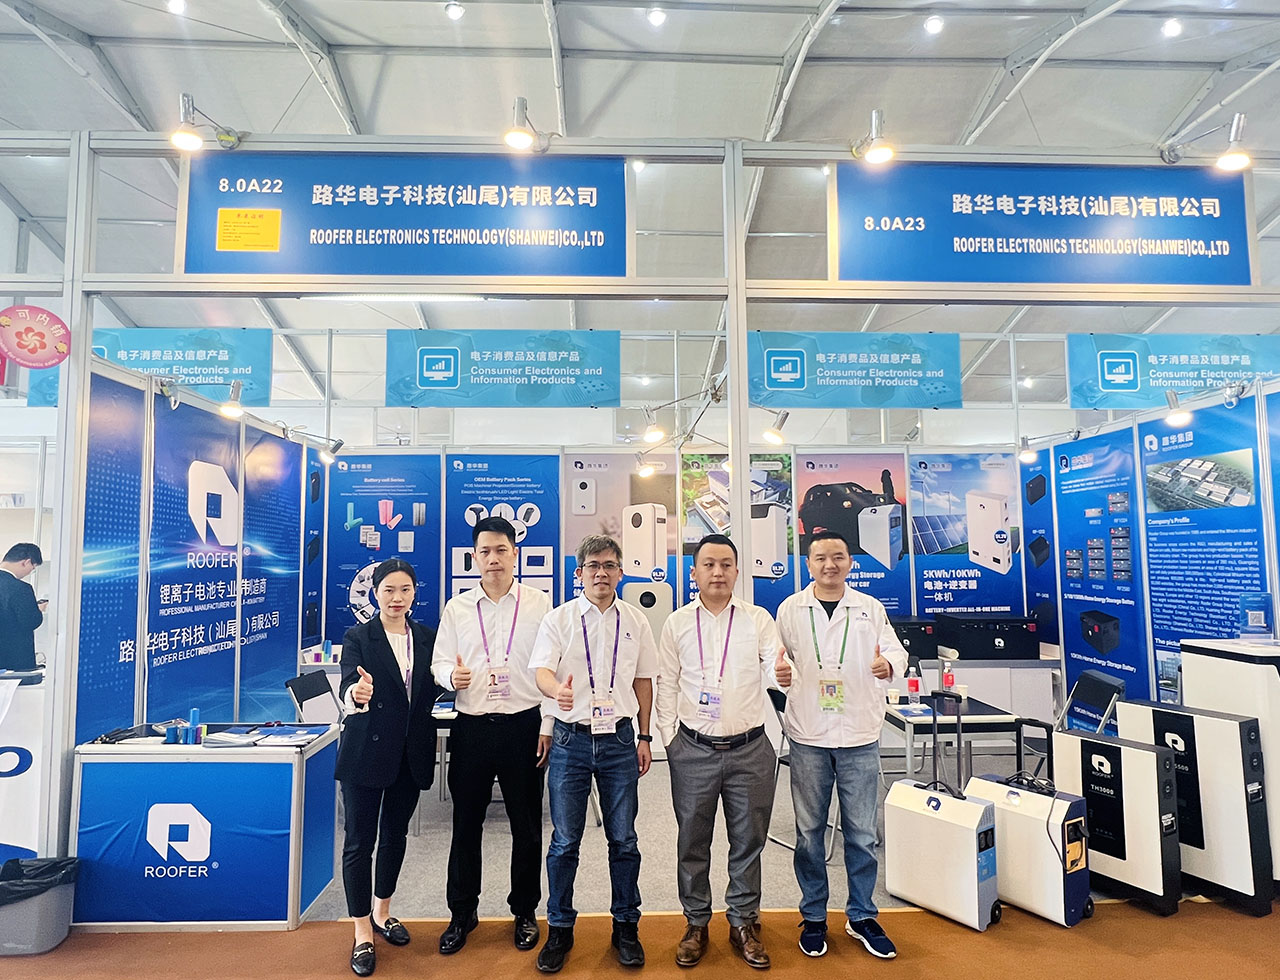 Roofer Group သည် China Import and Export Fair တွင် အောင်မြင်စွာ ပါဝင်ခဲ့ပါသည်။